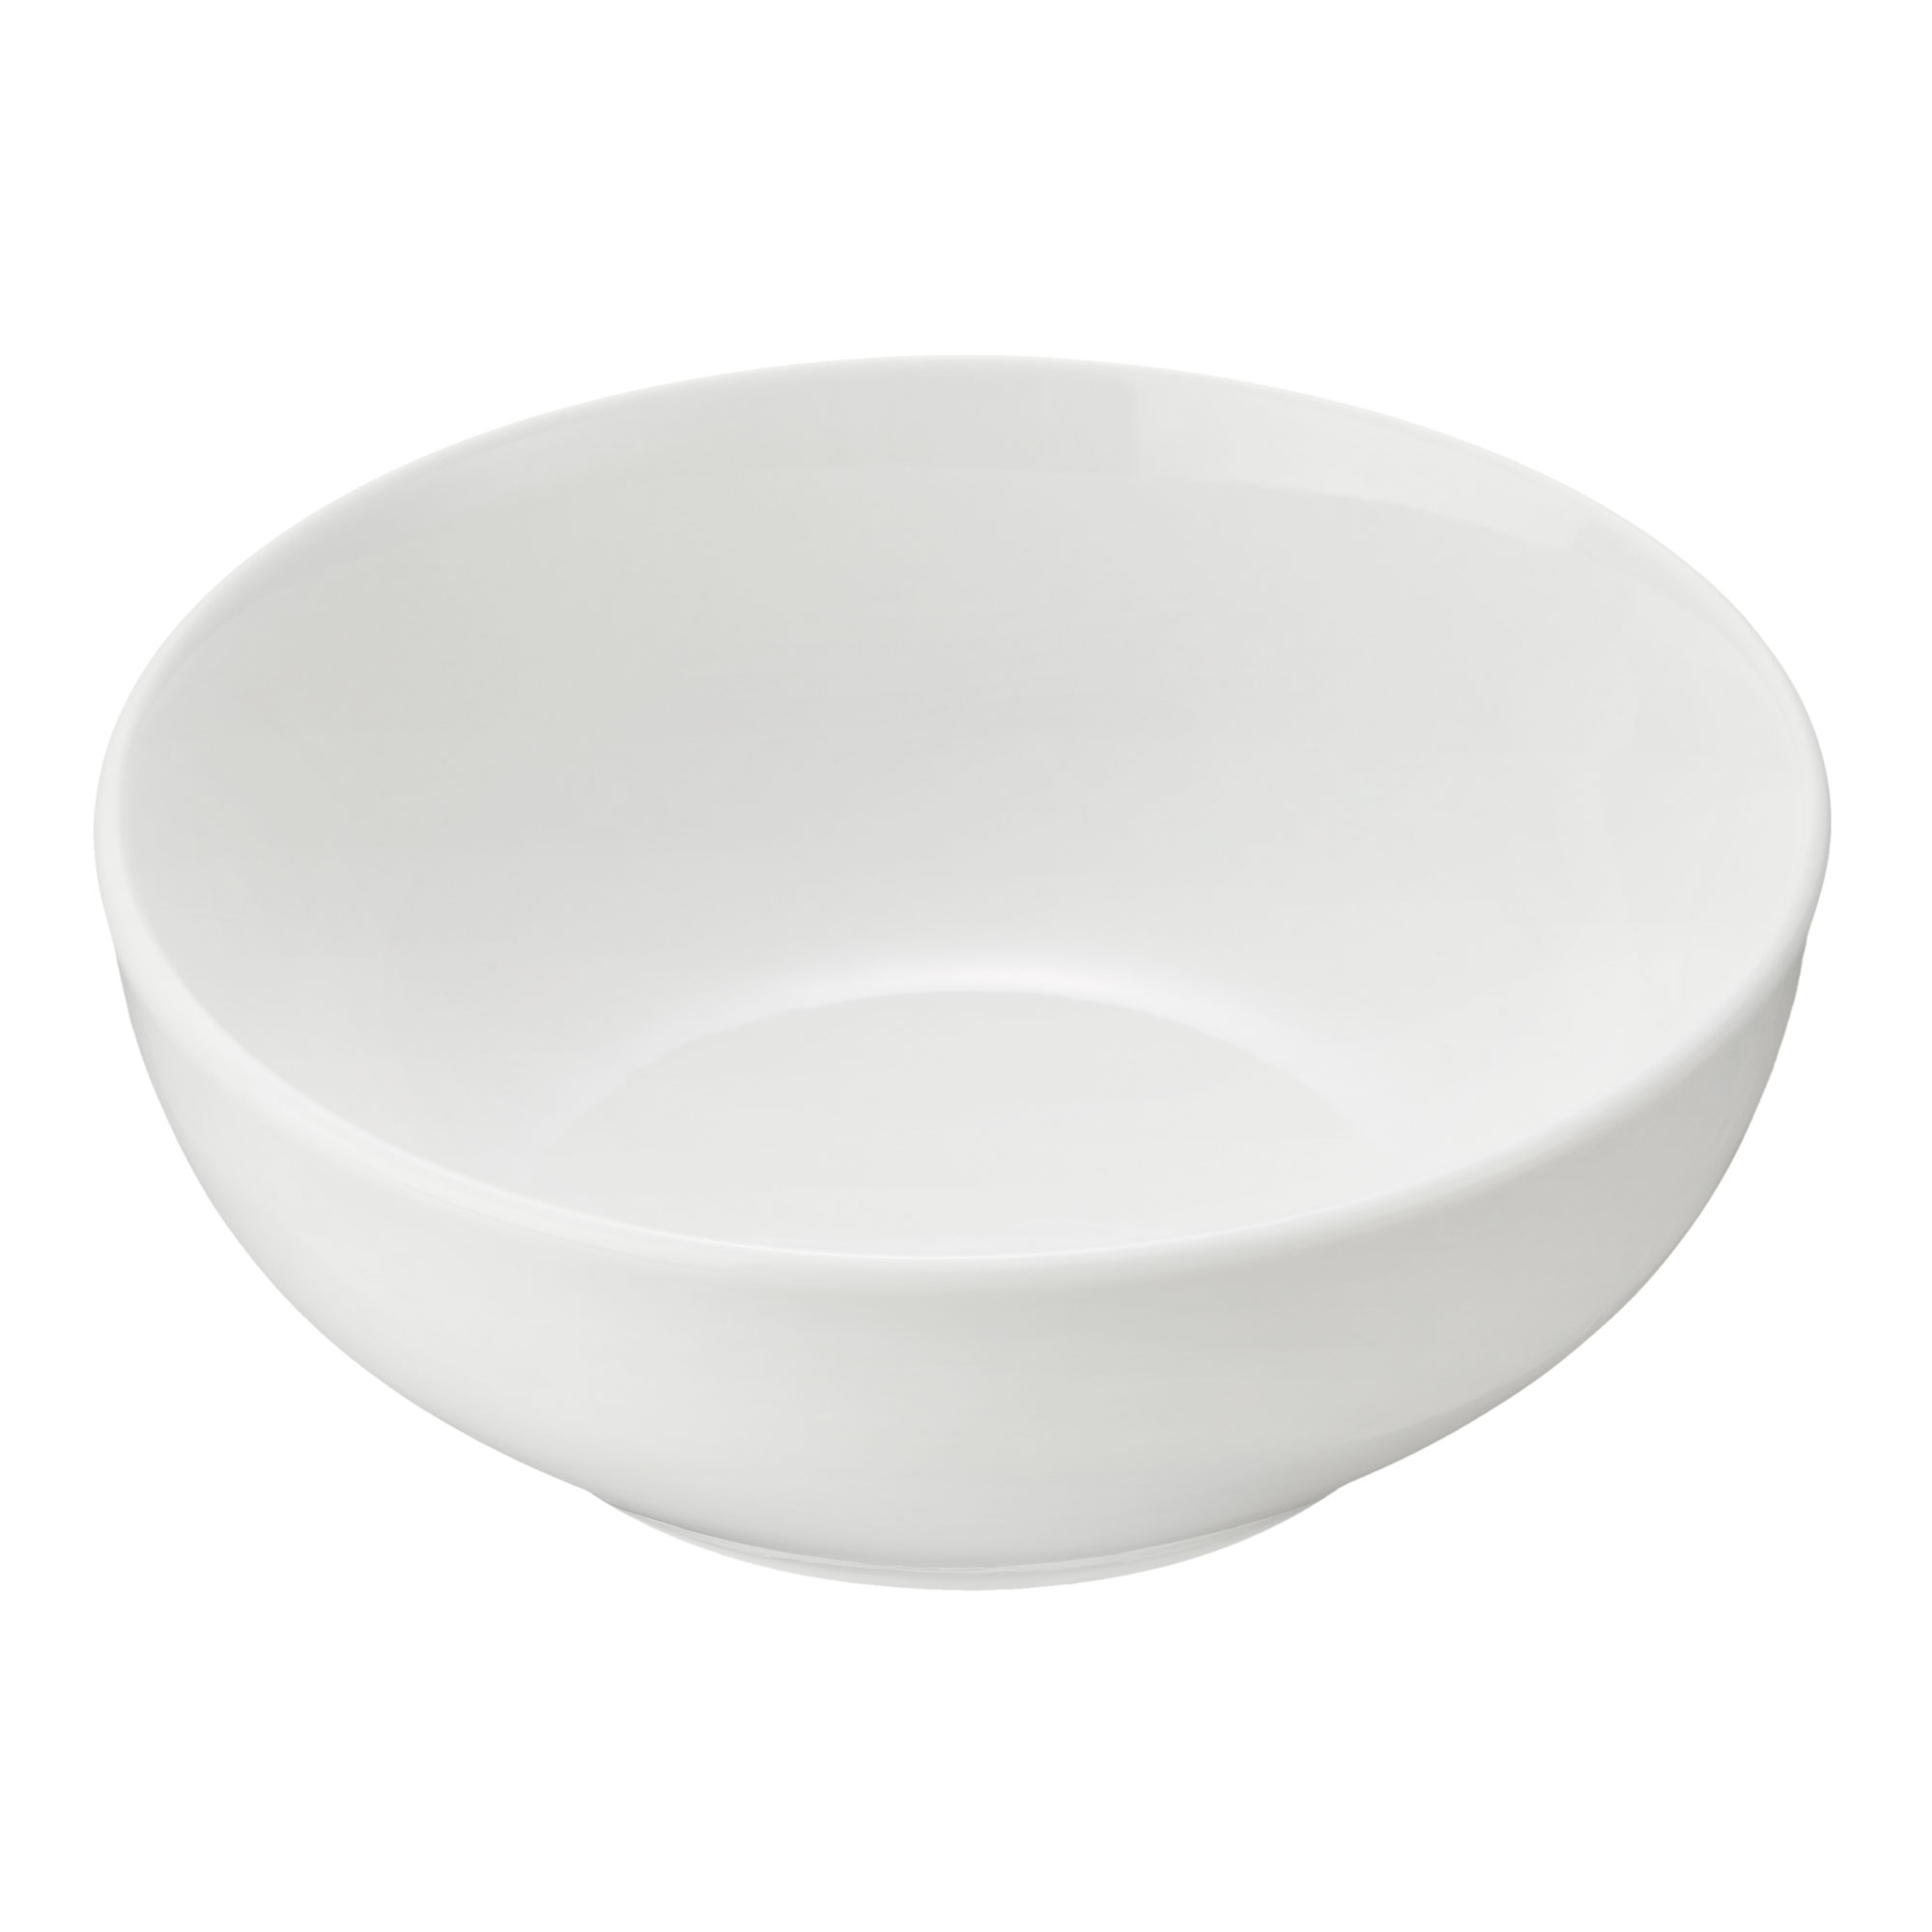 Mainstays Glazed White Stoneware Dinnerware Set, 12-Pieces - image 5 of 12